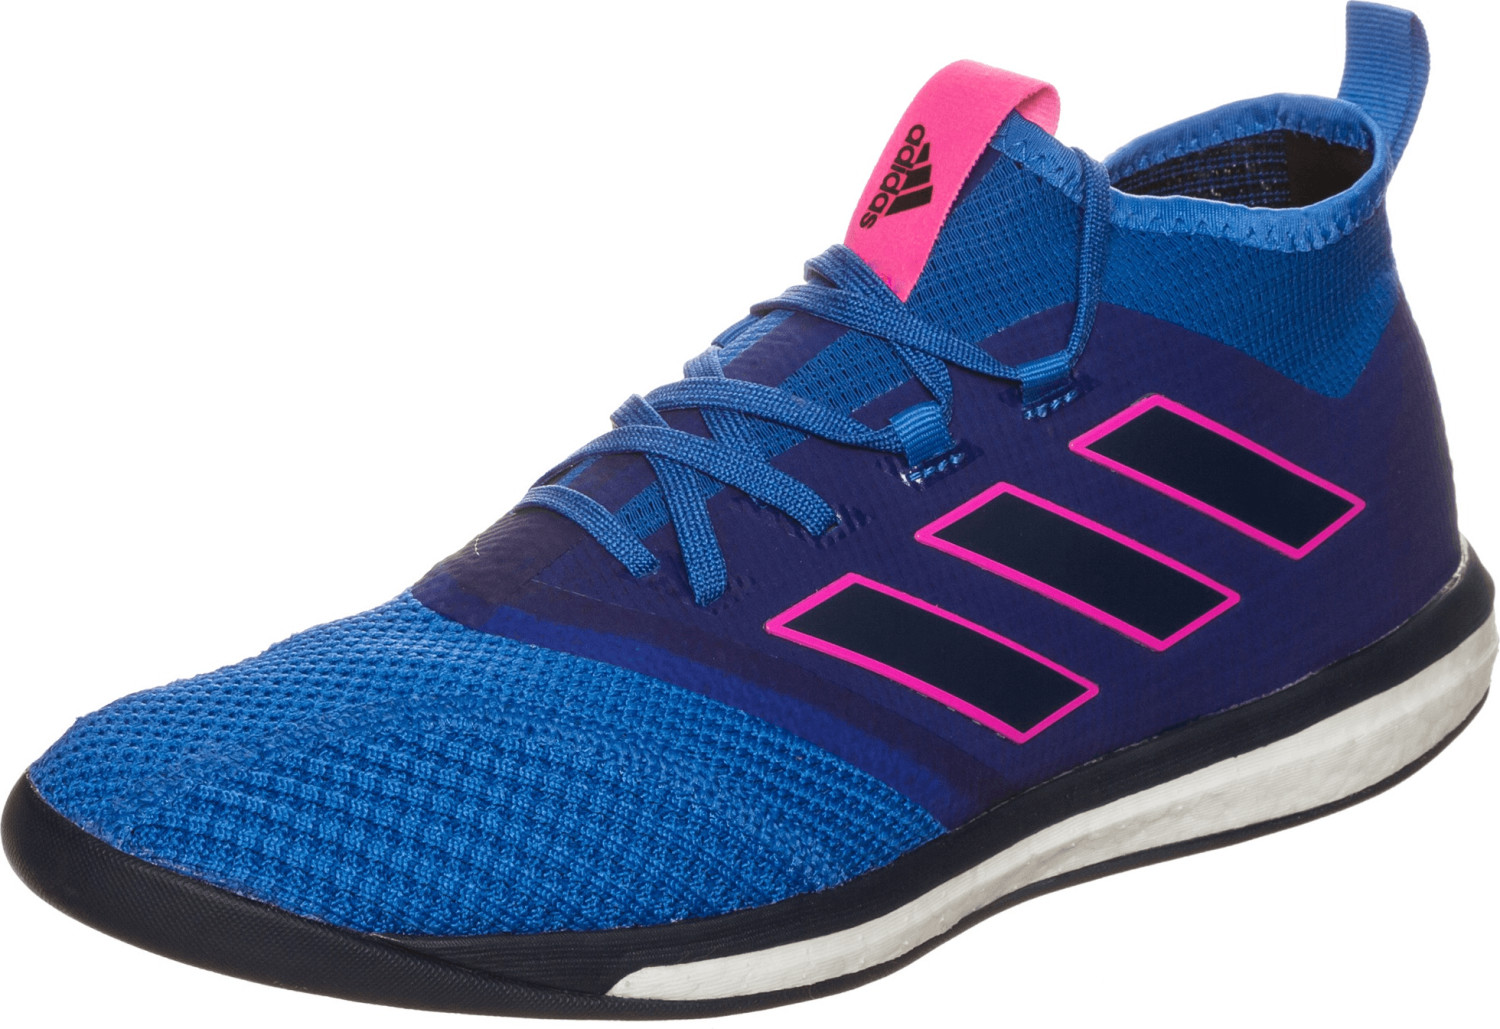 Adidas ACE Tango 17.1 Street TR blue/collegiate navy/shock pink